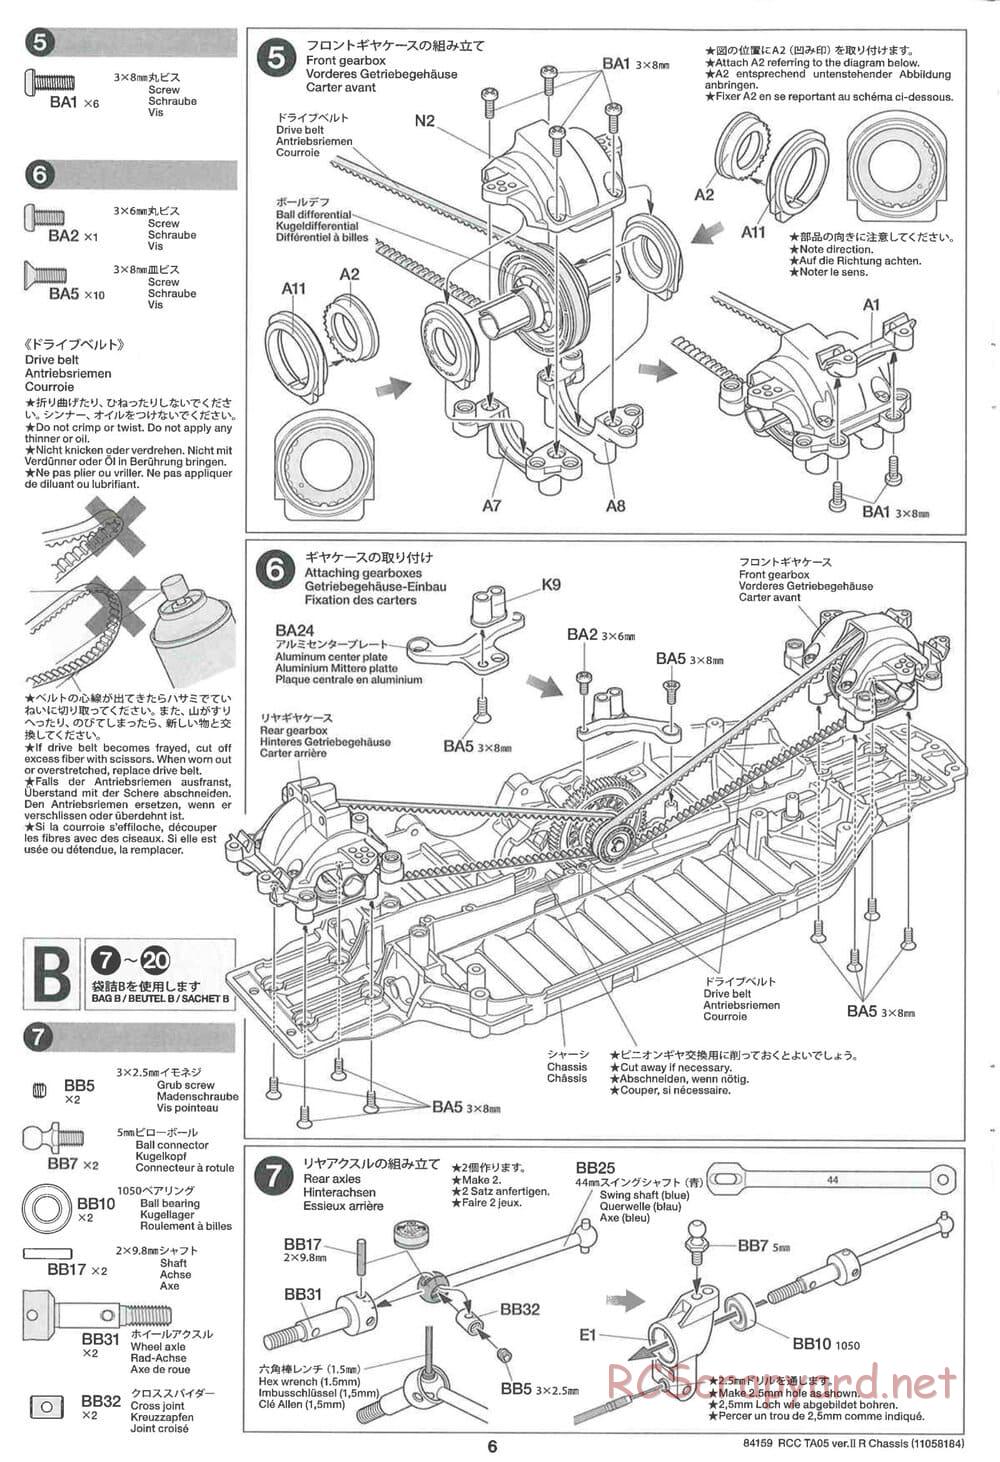 Tamiya - TA05 Ver.II R Chassis - Manual - Page 6